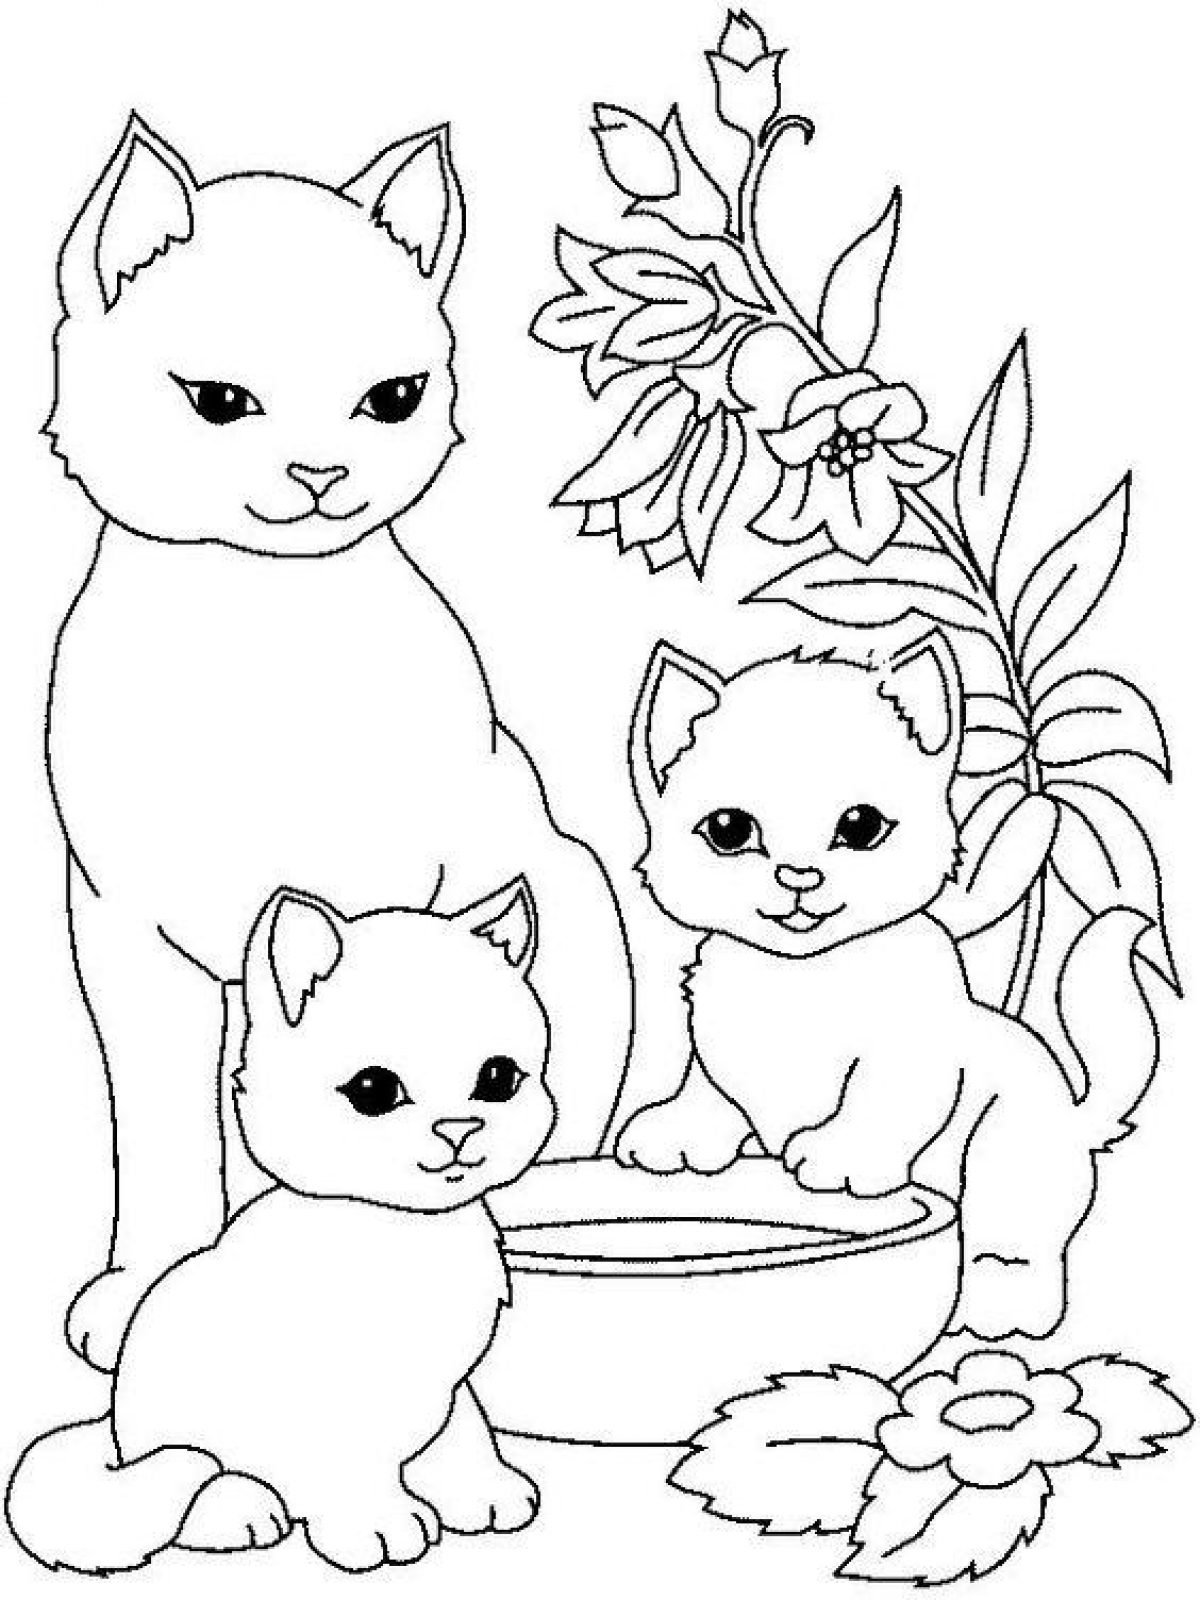 ‎App Store: Собака и кошка Книжка-раскраска - All In 1 Рисунок краски и цвет игры для ребенка